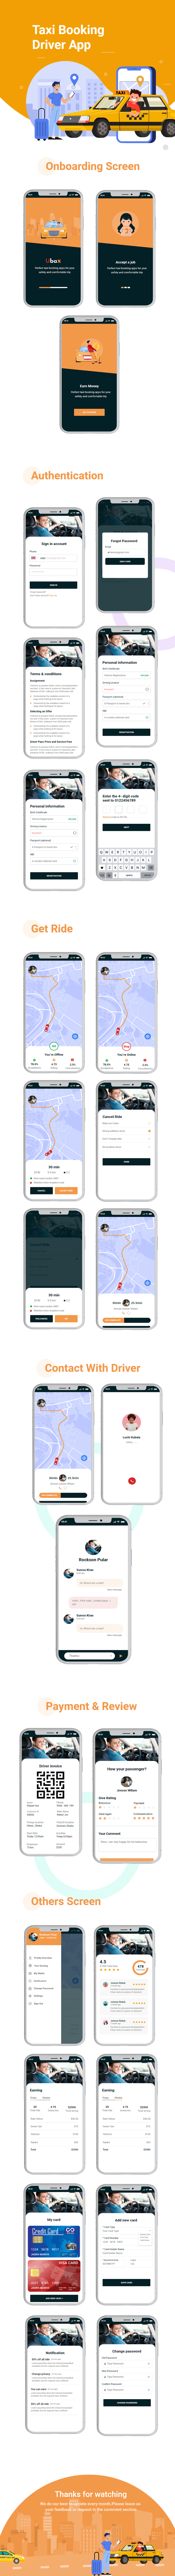 Ubax- Taxi Booking & Taxi Driver Mobile App UI Kit - 3